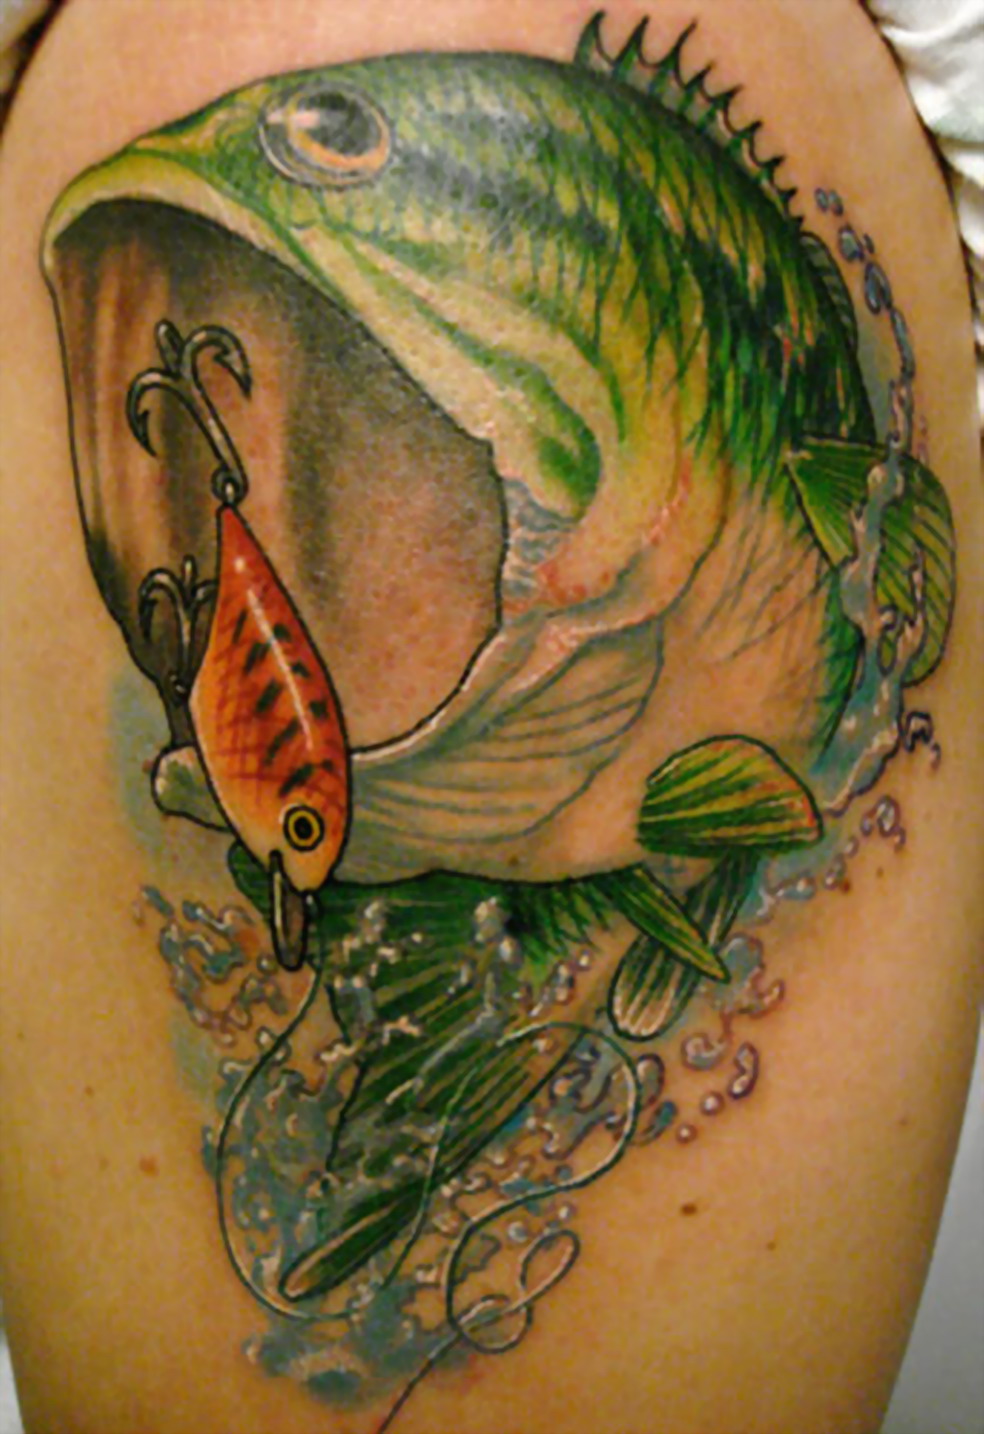 Bass fishing tattoo by elguapo6 on DeviantArt